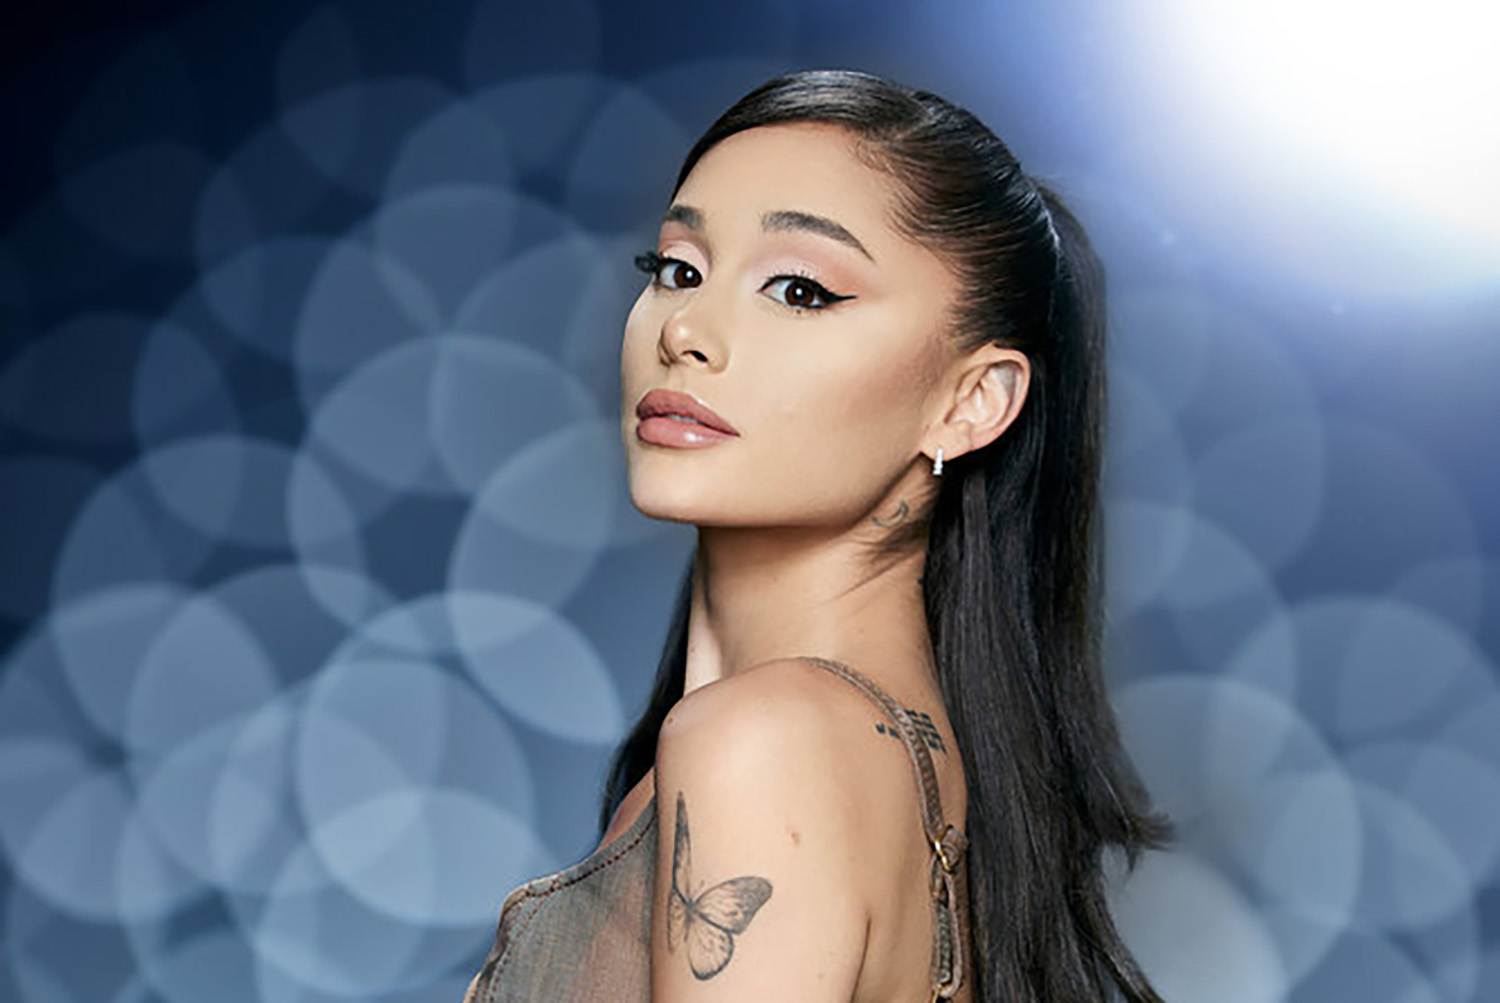 Ariana Grande promo image for The Voice Season 21